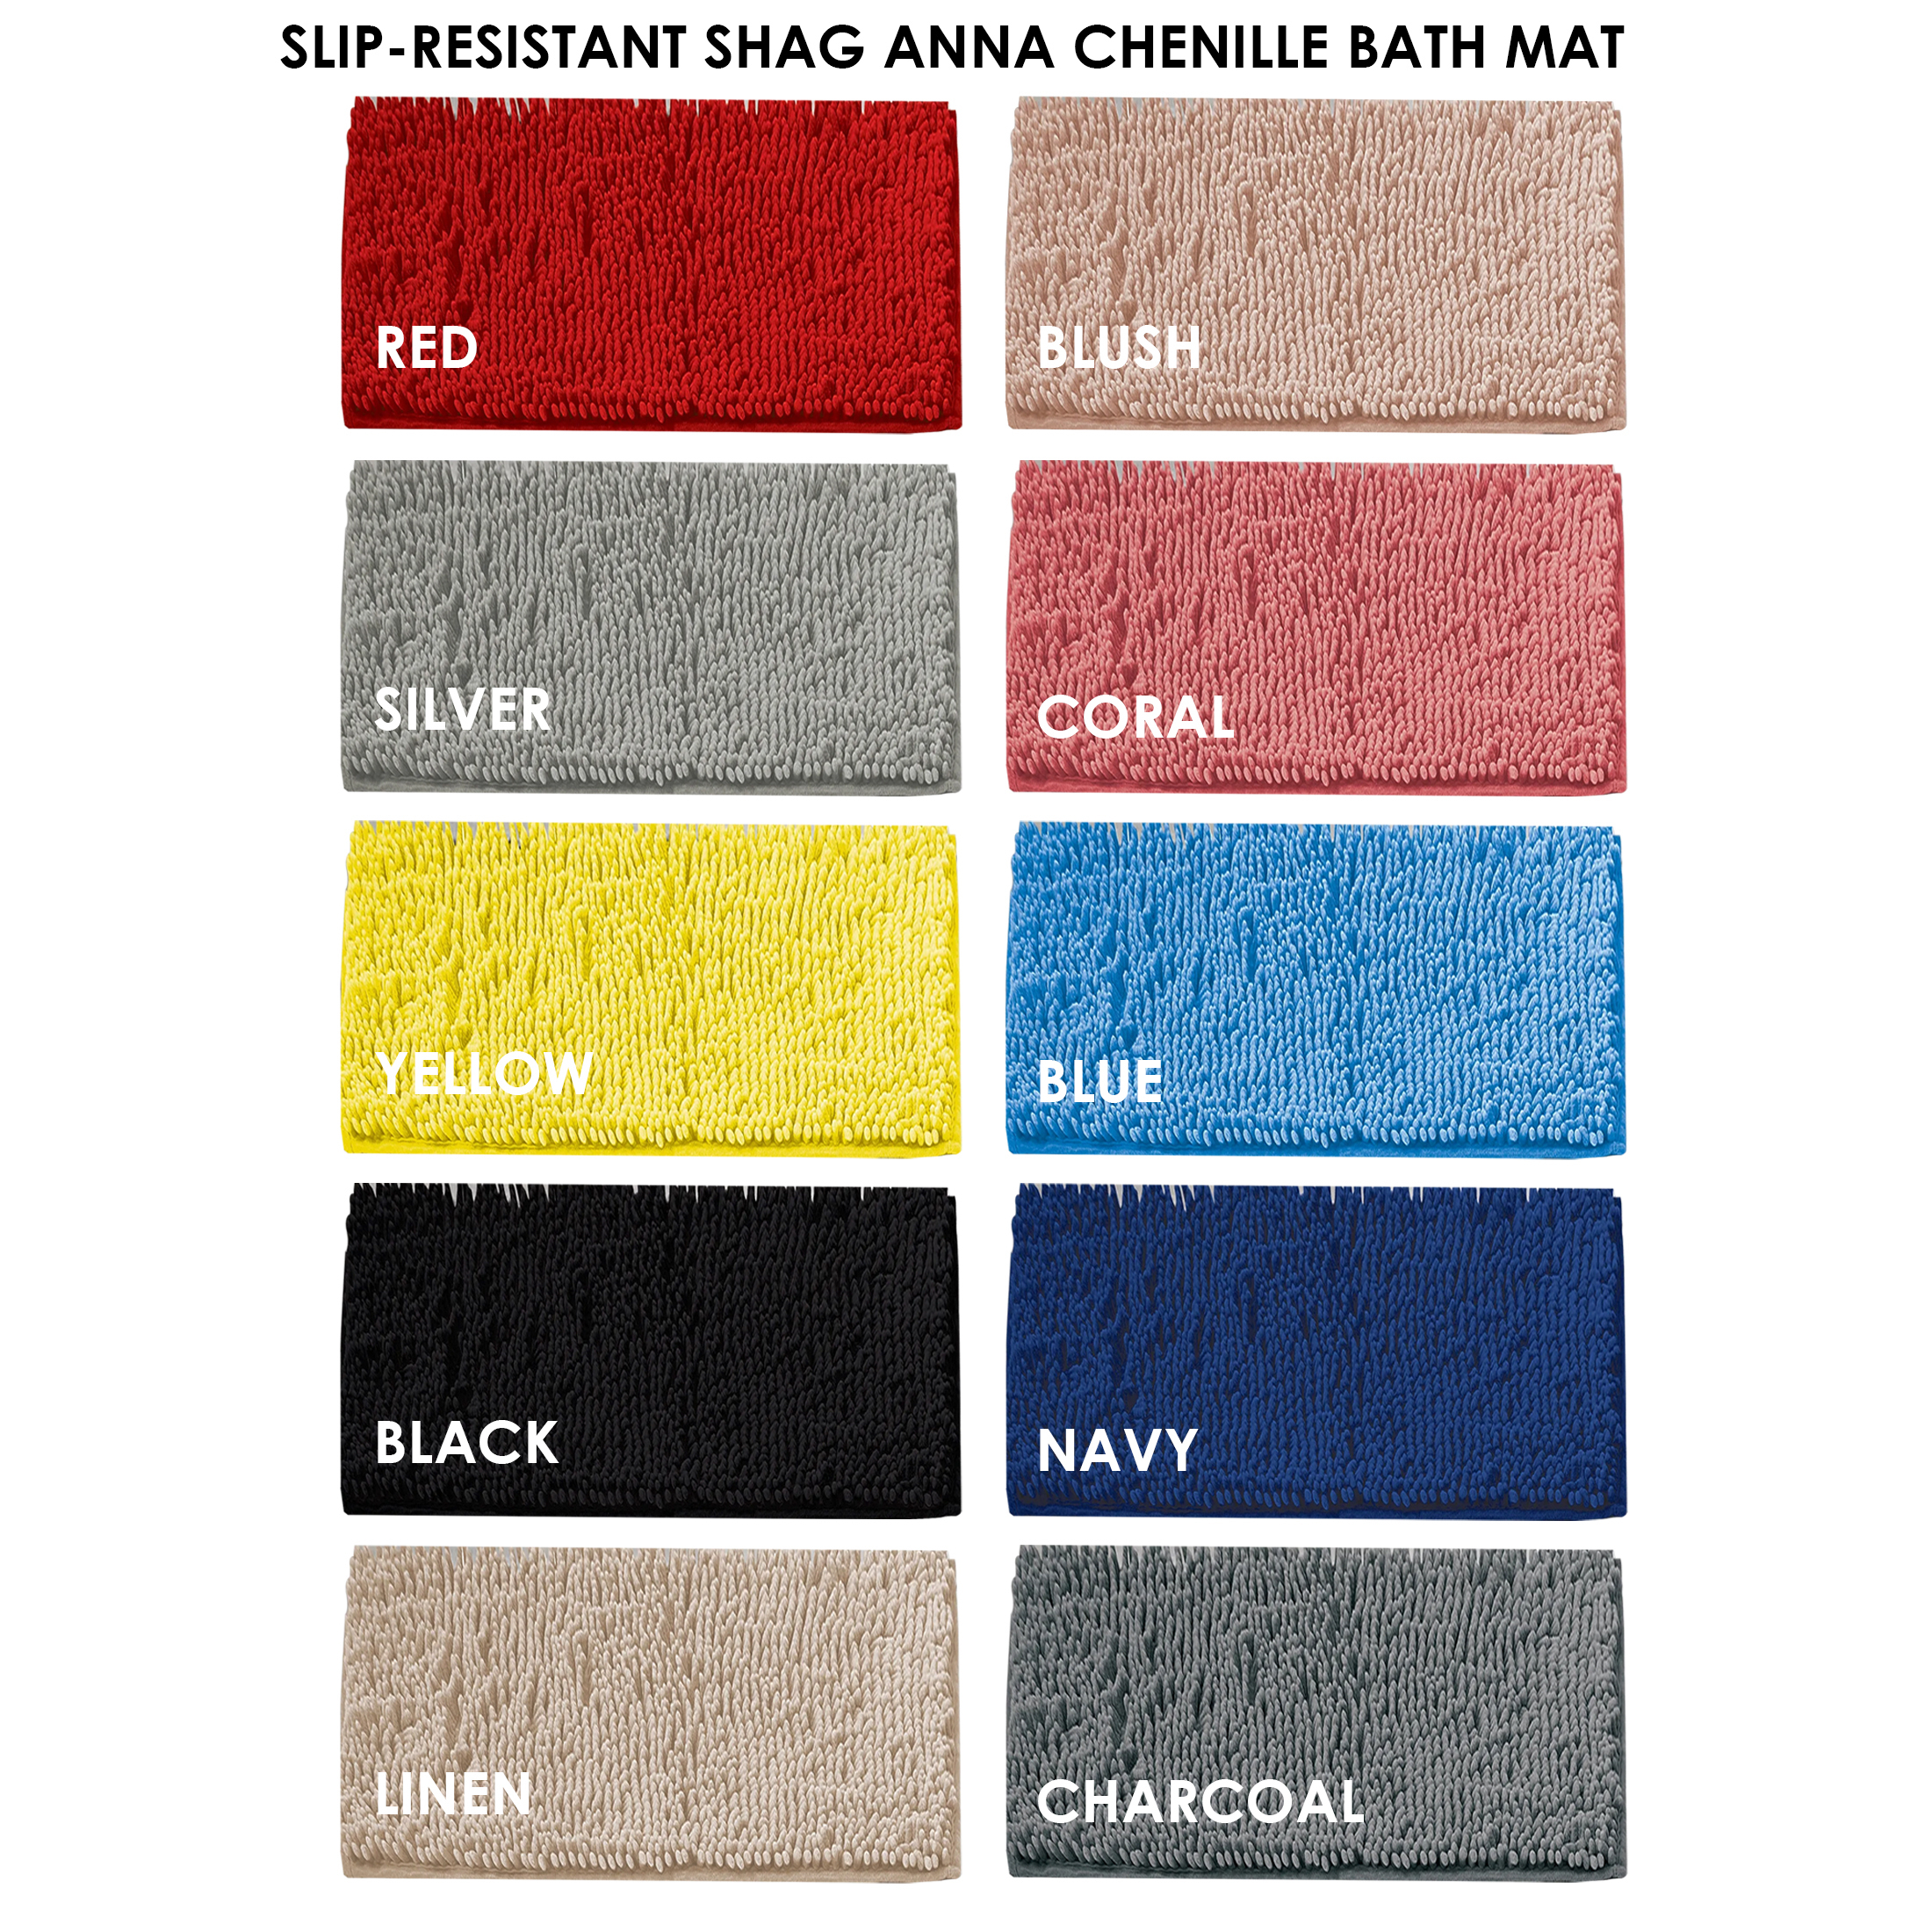 Slip-Resistant Shag Anna Chenille Soft Absorbent Bath Mat Bathroom Rug 17 X 24 - Blue